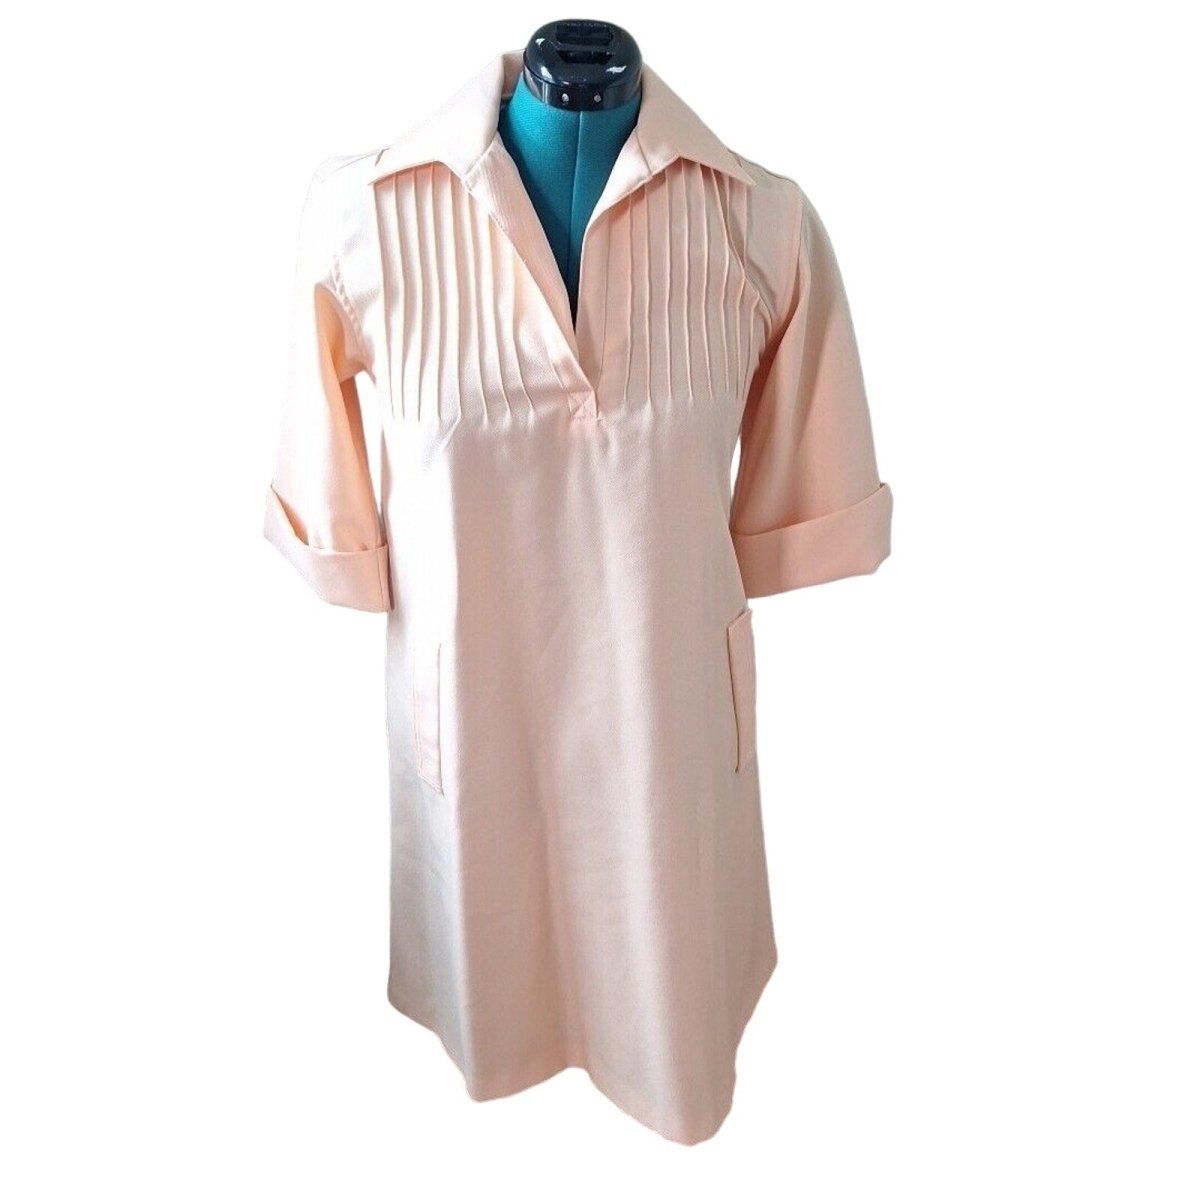 Vintage 70s Peach Polyester A-Line Dress Size Medium Women - themallvintage The Mall Vintage 1970s Dresses Mod